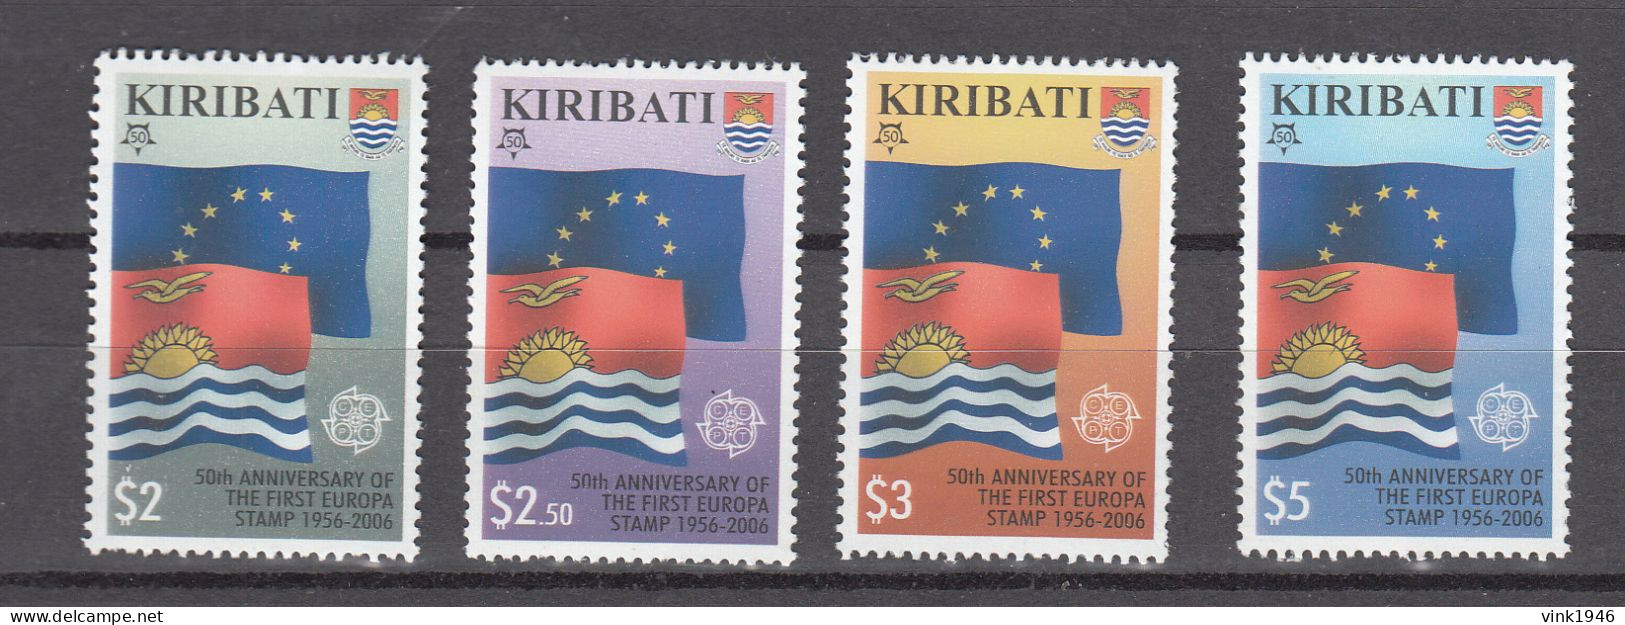 Kiribati 2006,4V,50th Ann. Of First Europa Stamp 1956-2006,MNH/Postfris(A4930) - 2006